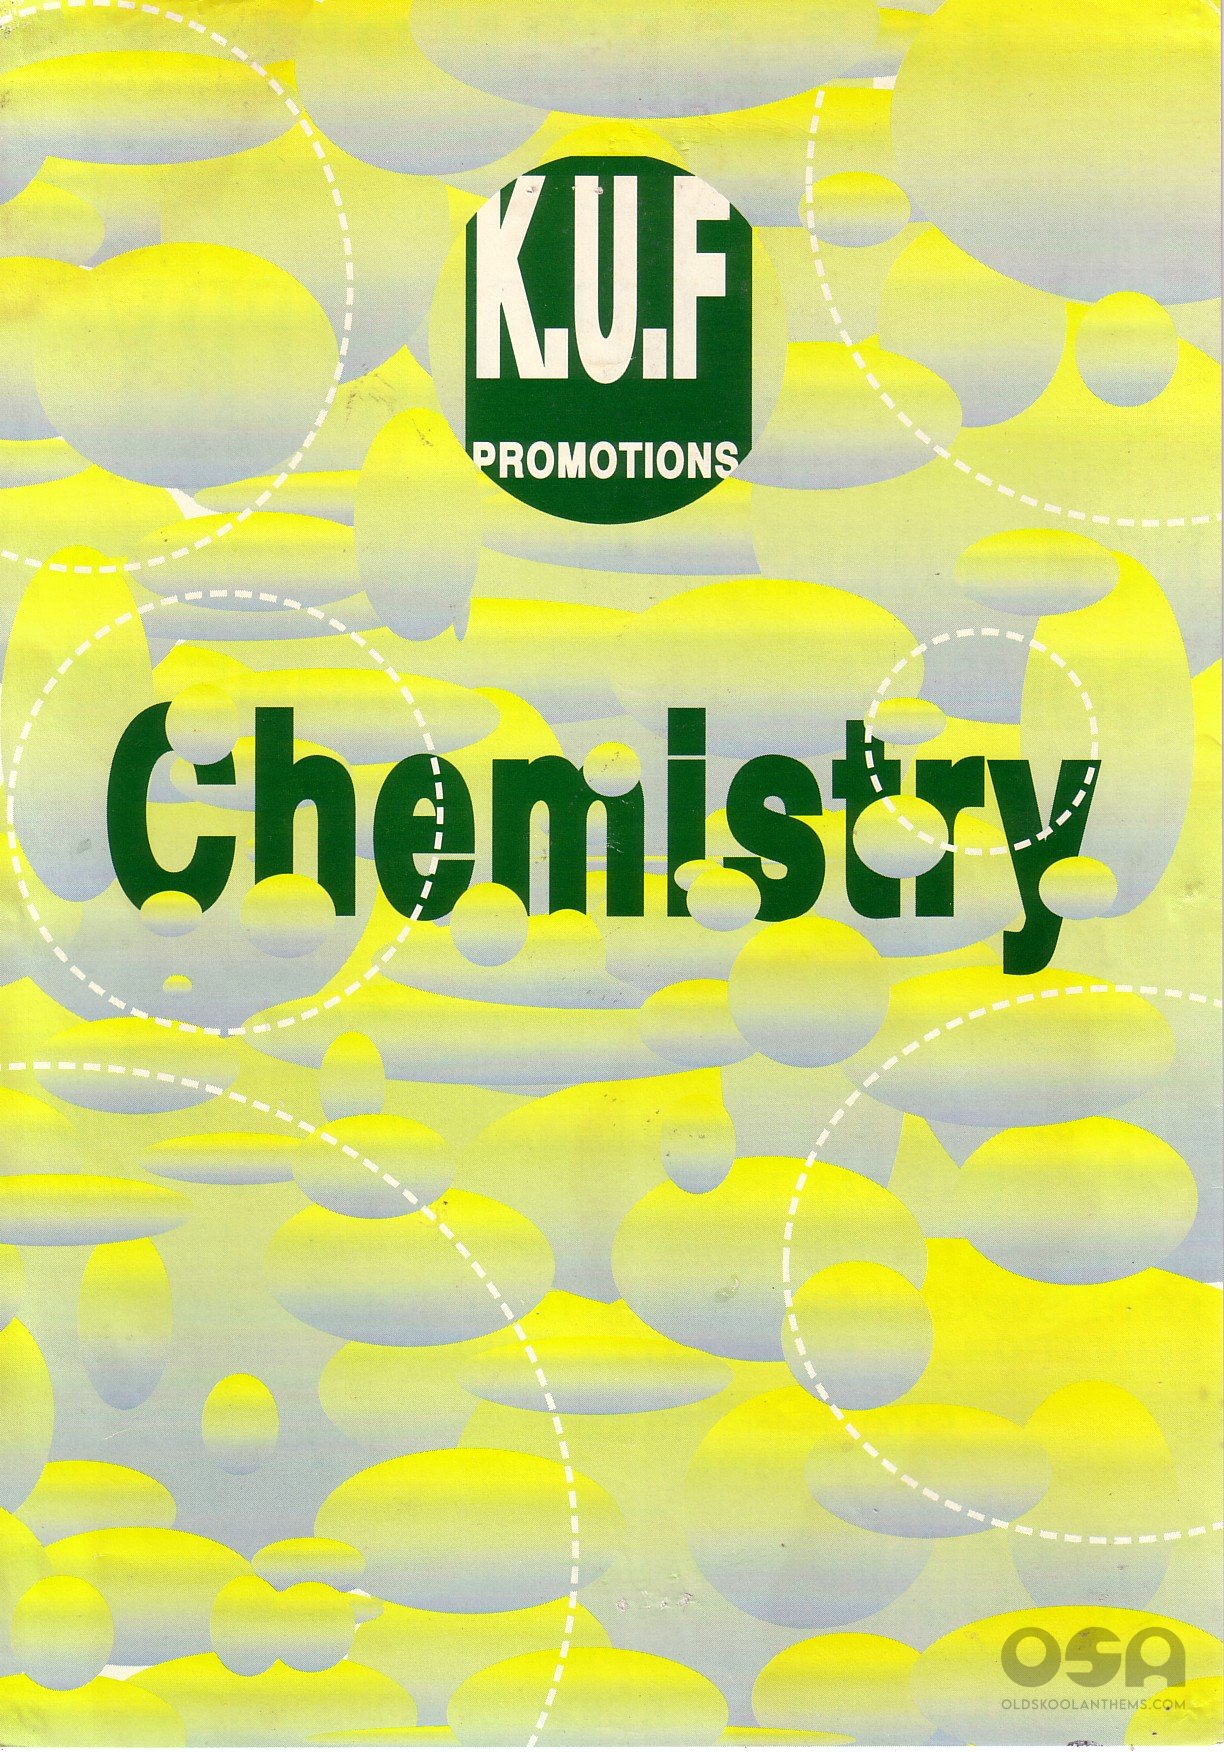 1_Chemistry___Tokyo_Joes_Preston_Every_Tues_Commencing_2nd_June_1992.jpg